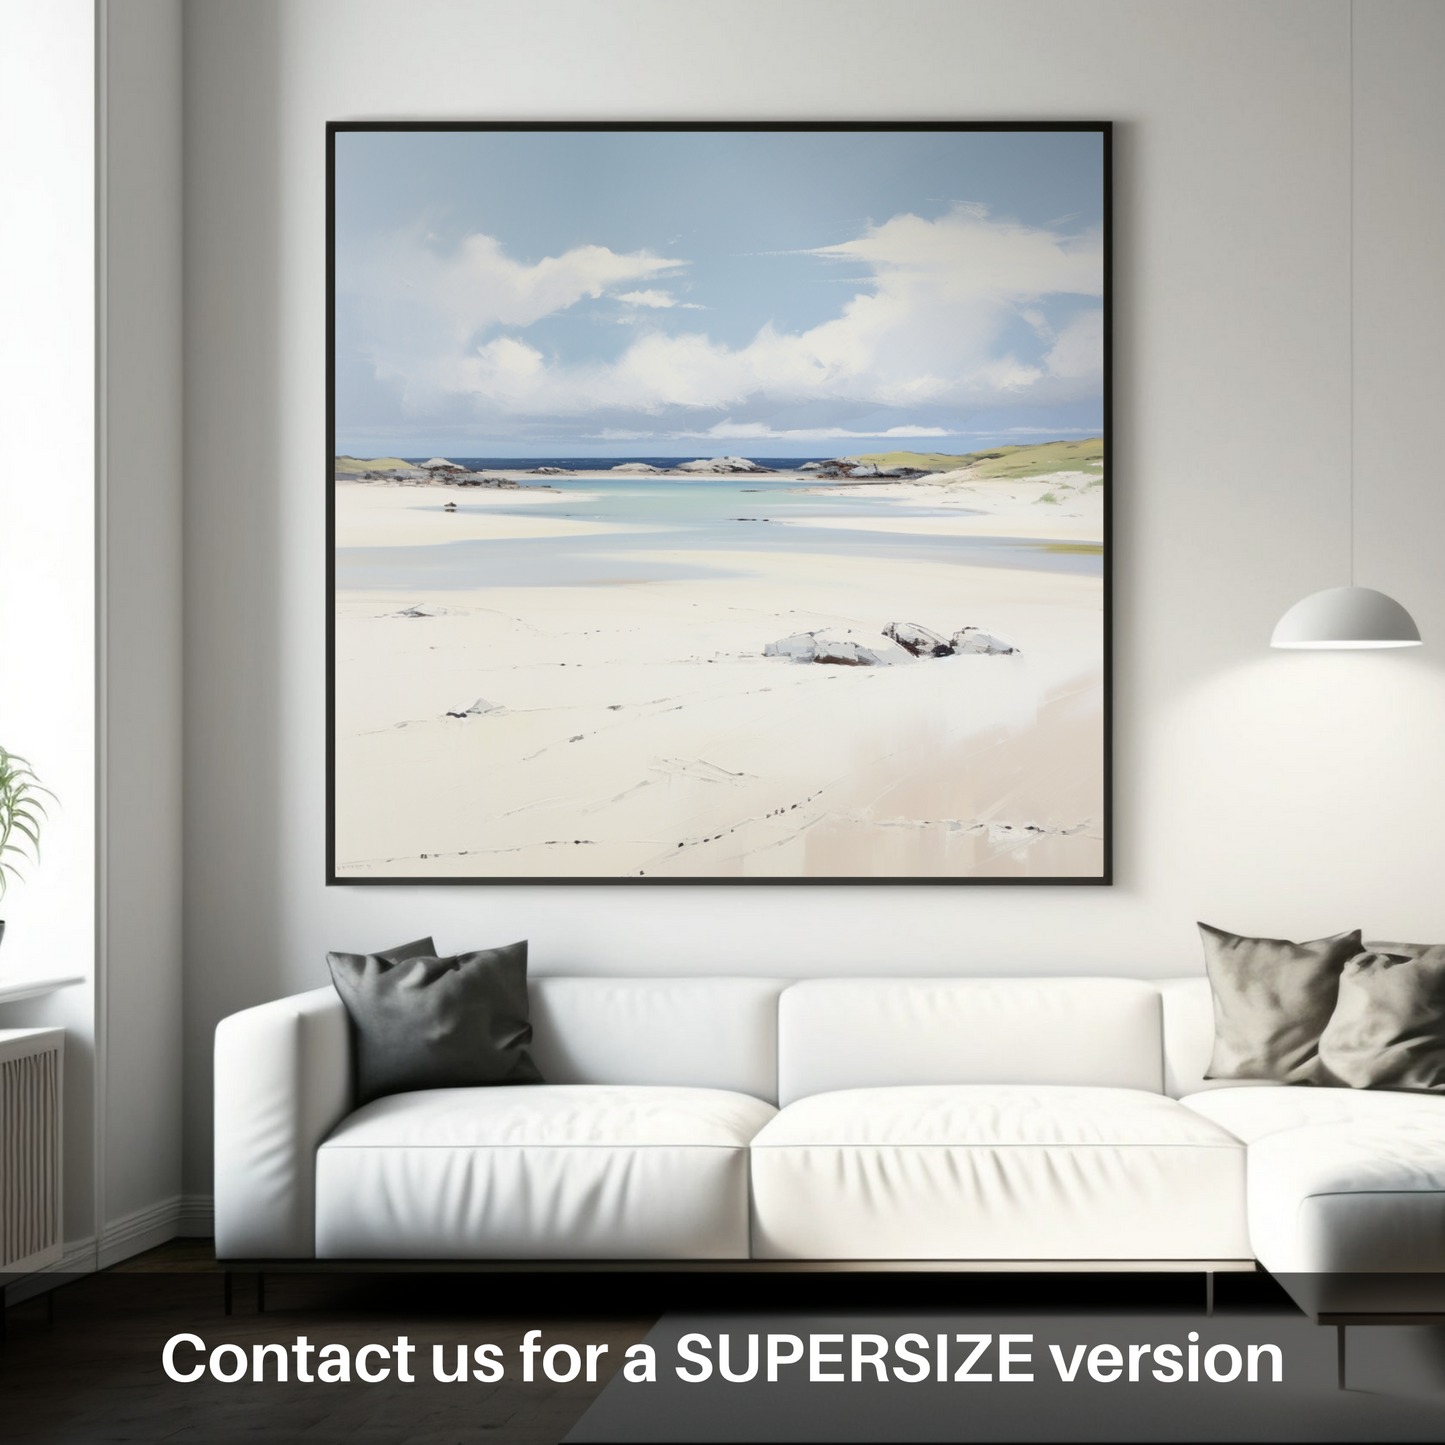 Huge supersize print of Camusdarach Beach, Arisaig